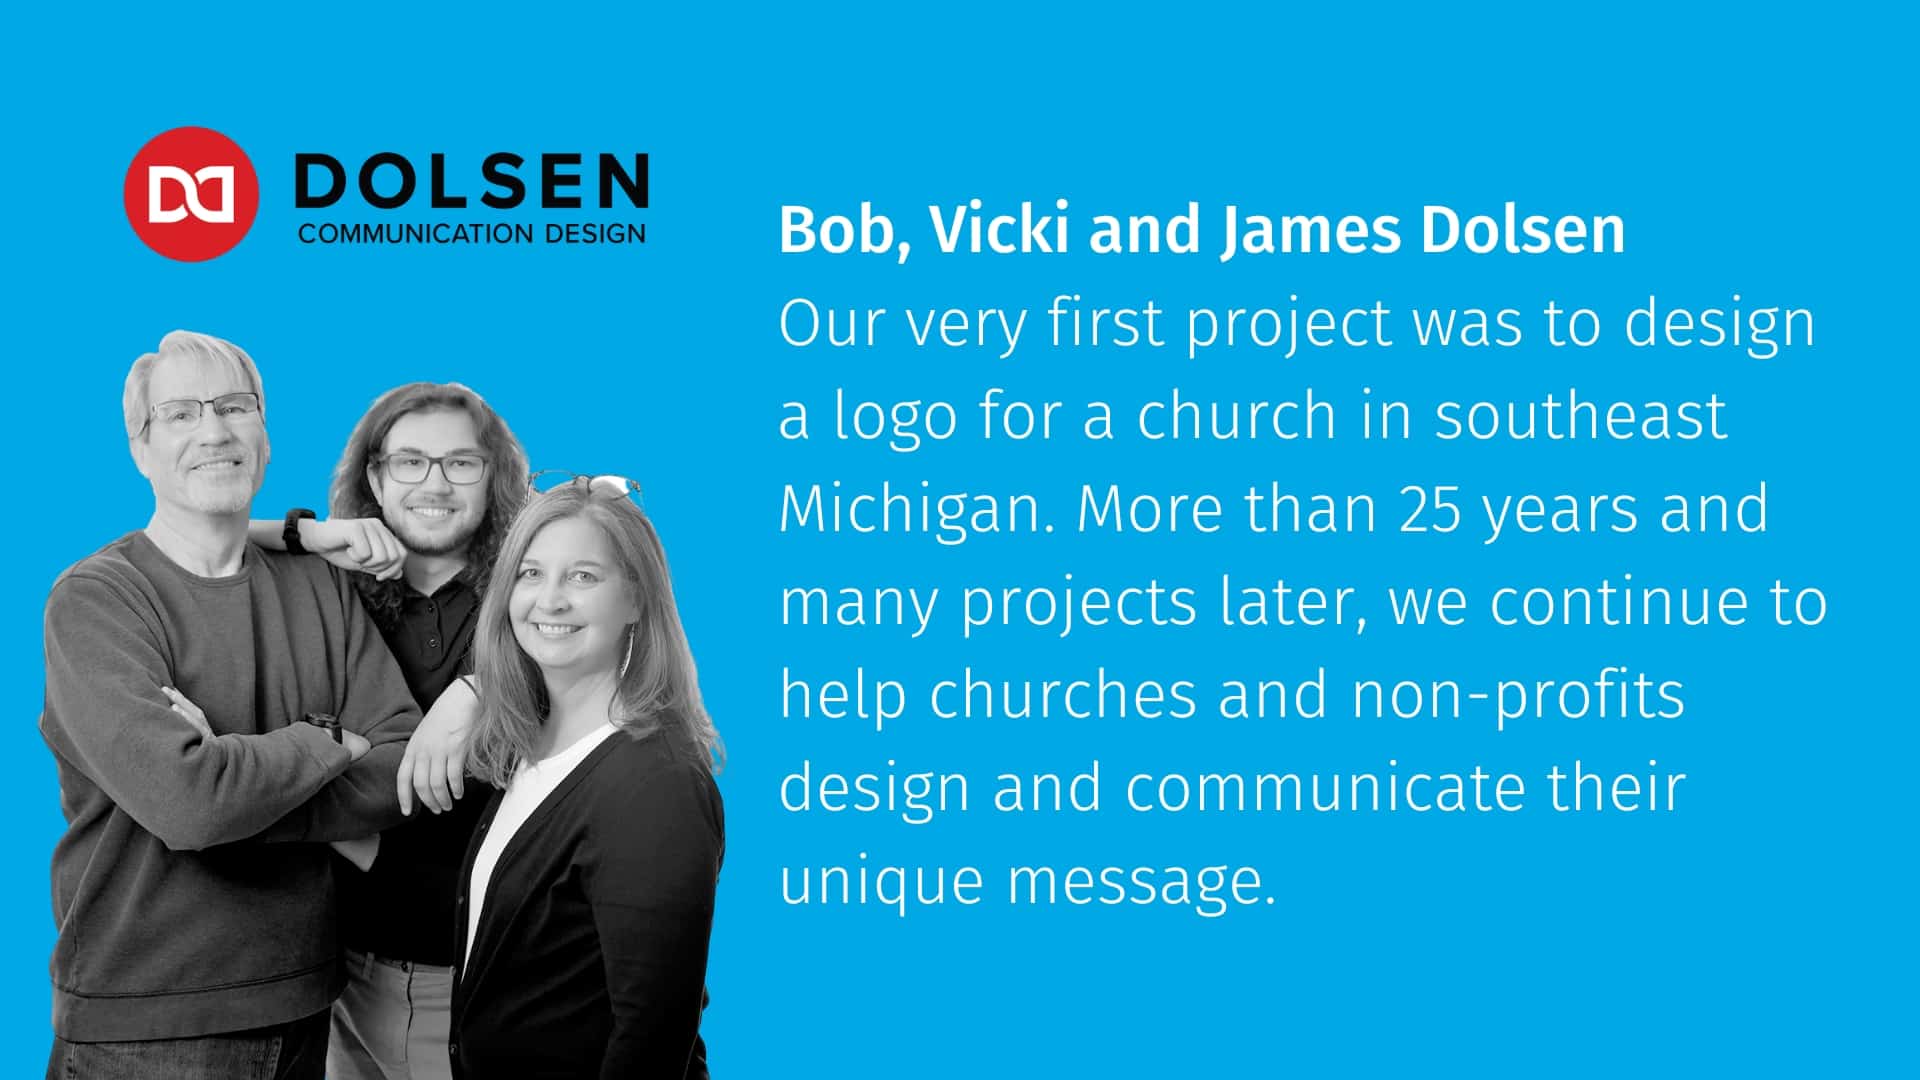 Dolsen Communication Design - Bob, Vicki and James Dolsen